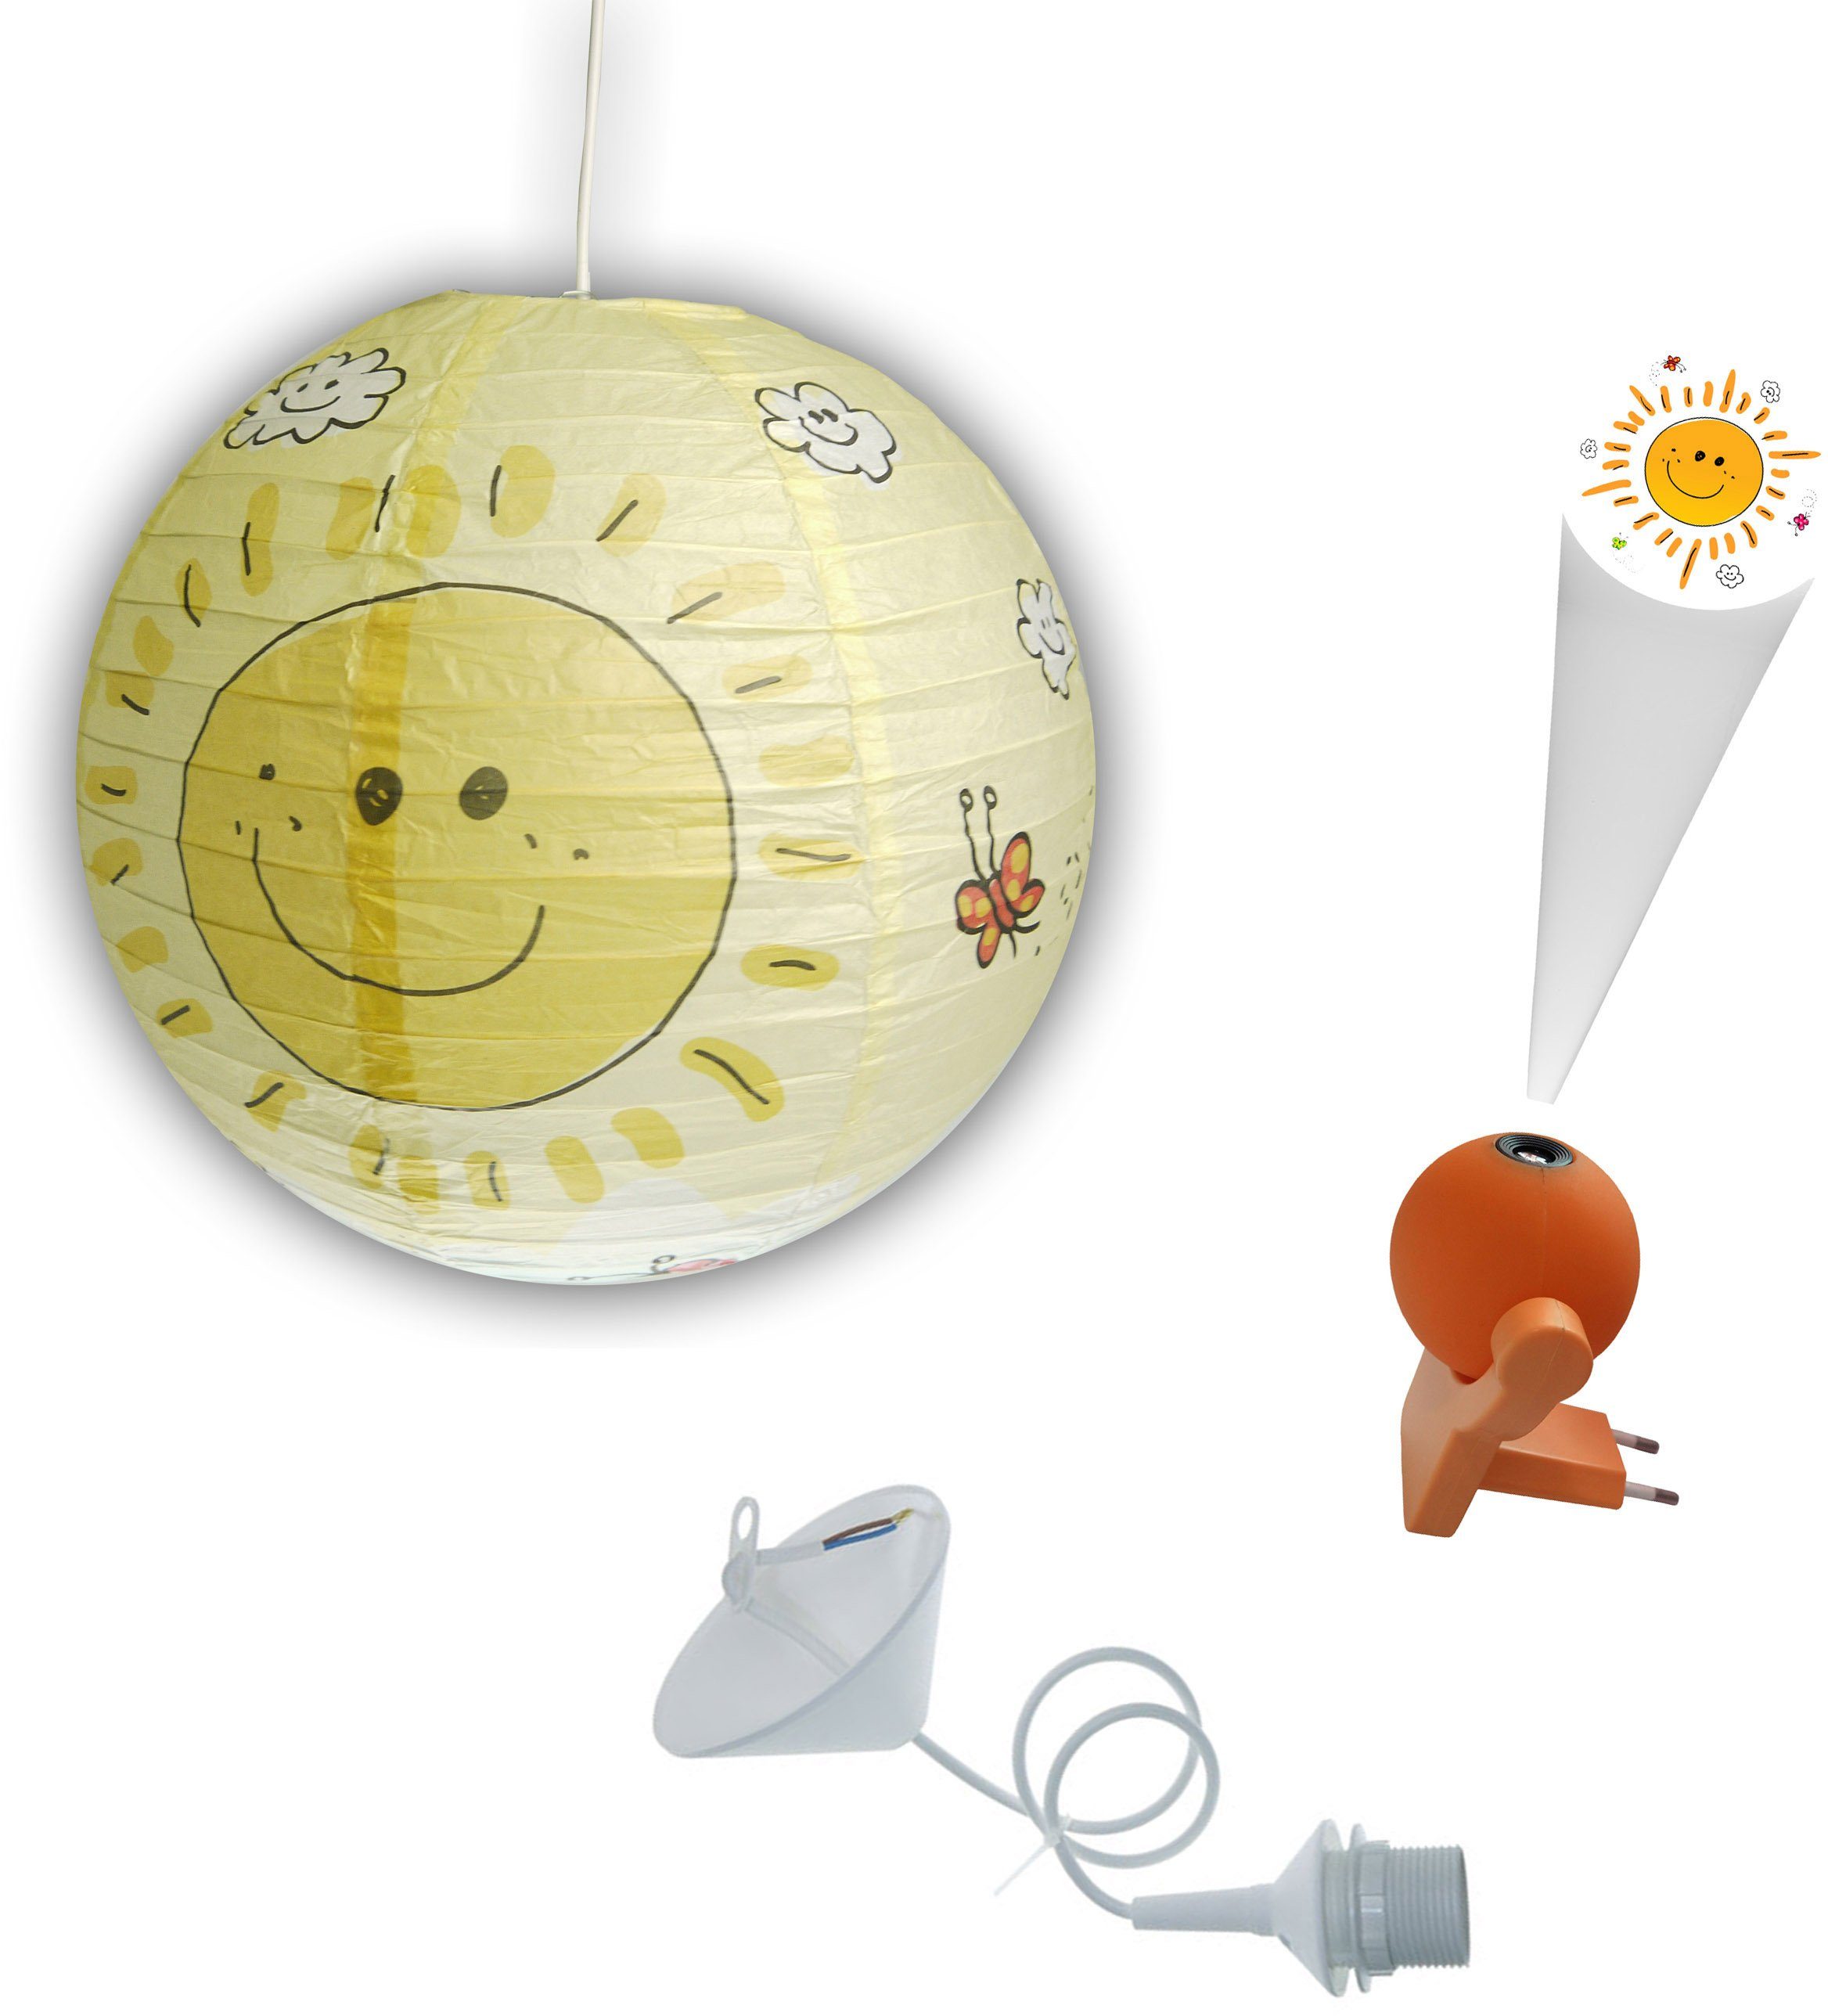 Nachtlicht 1 Sunny 1 x integriert, LED niermann x Bundle (Set), Sunny, Papier-Pendelleuchte fest Steckernachtlicht, LED